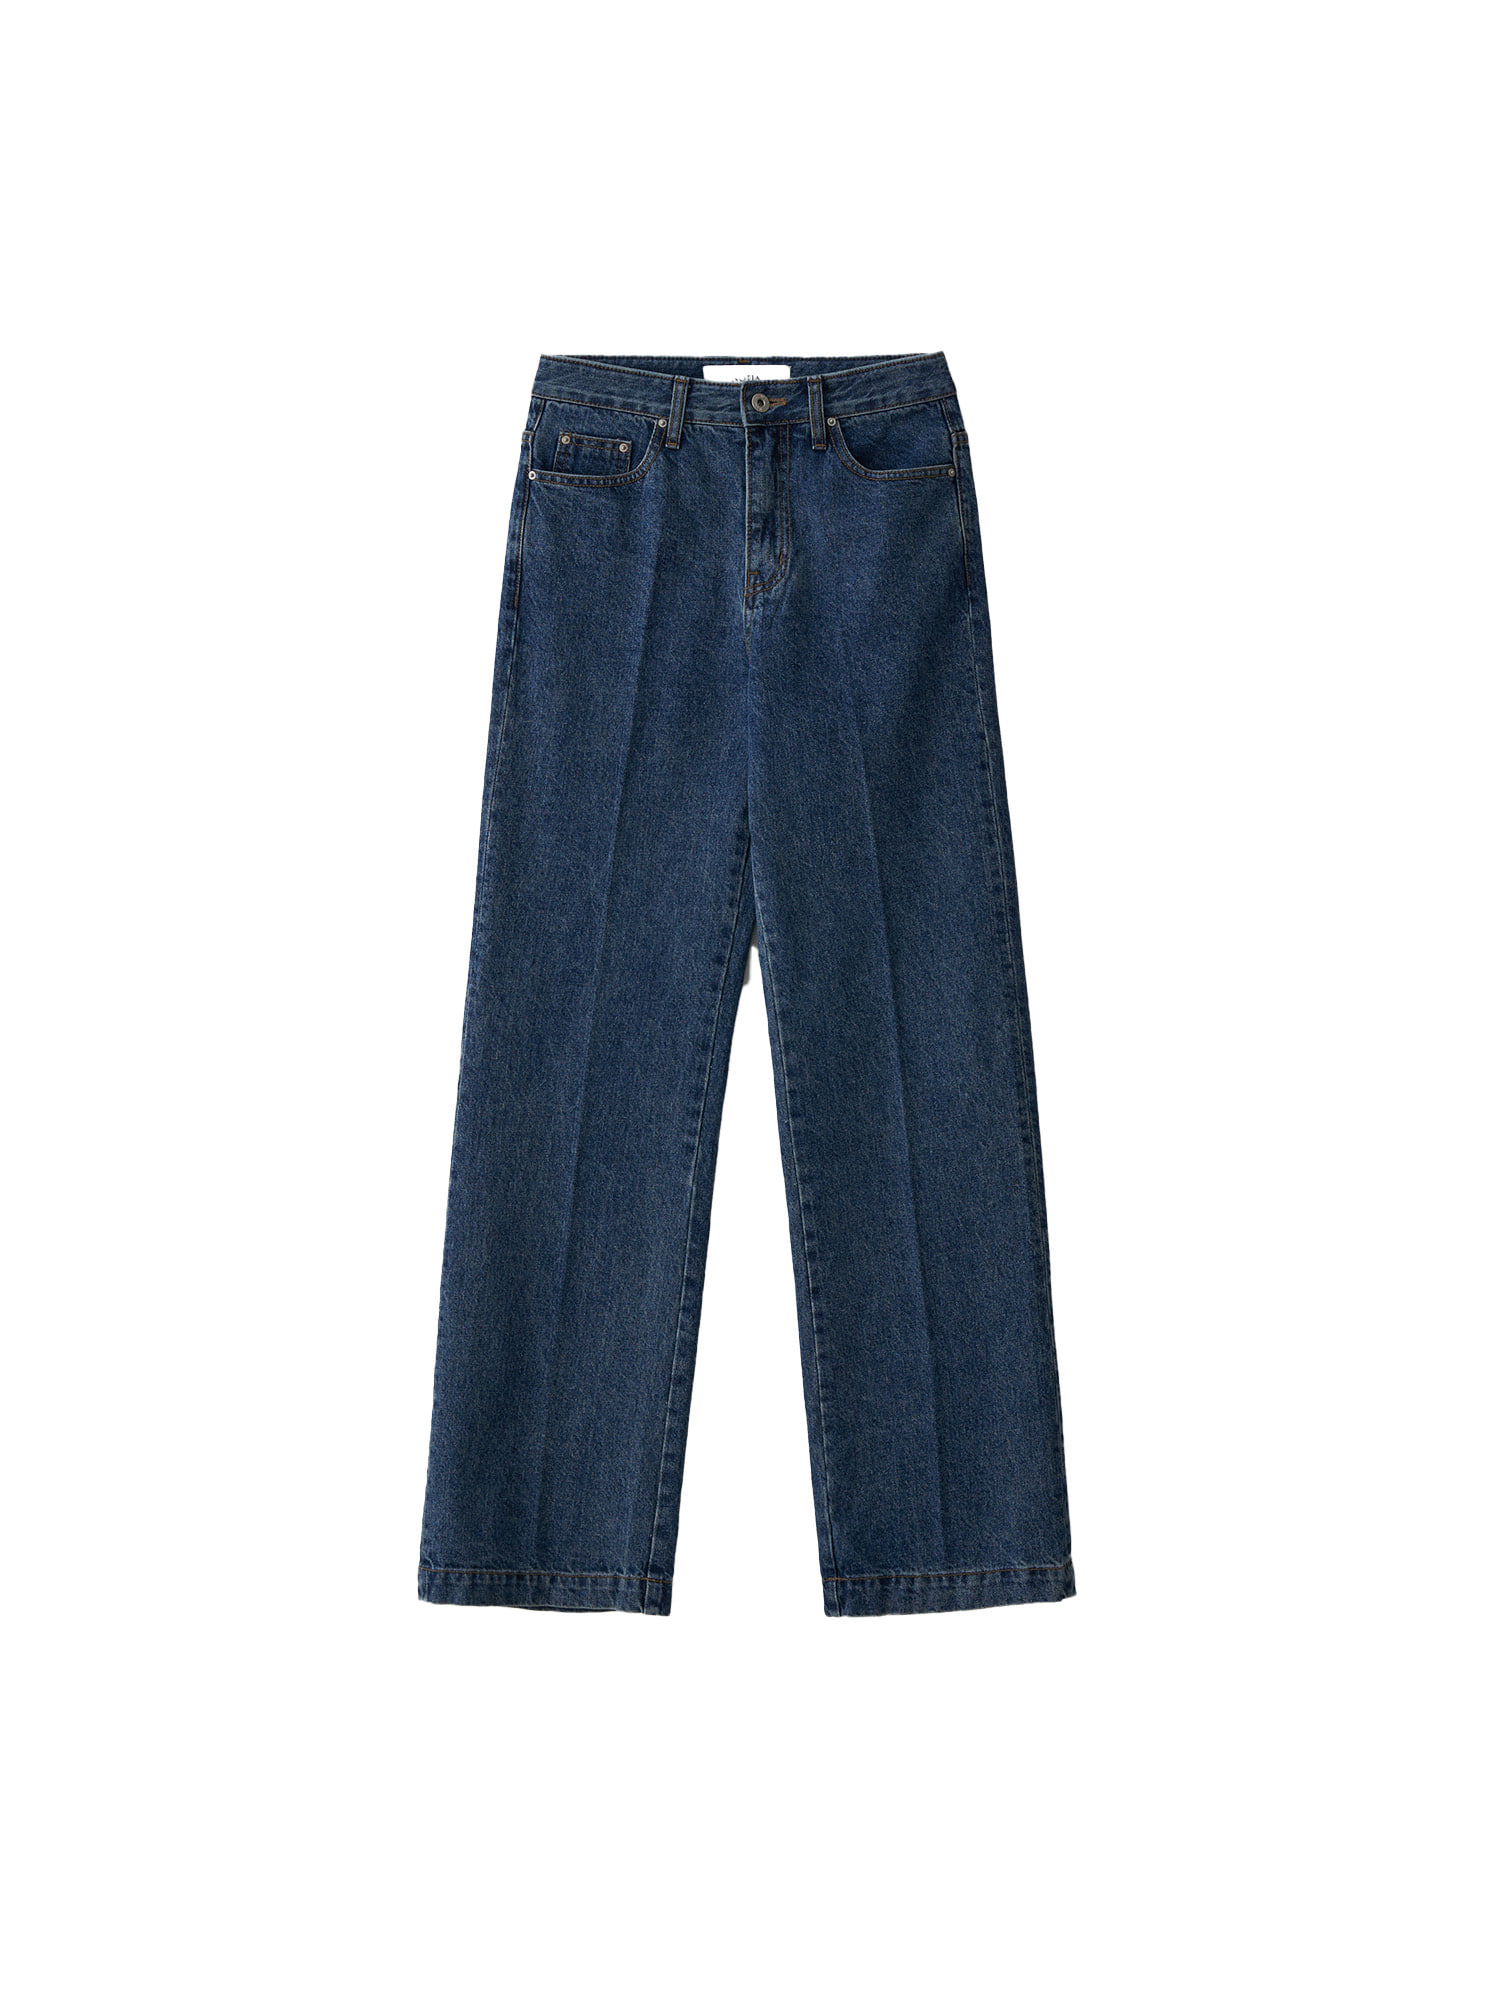 Vintage Indigo Denim Pants